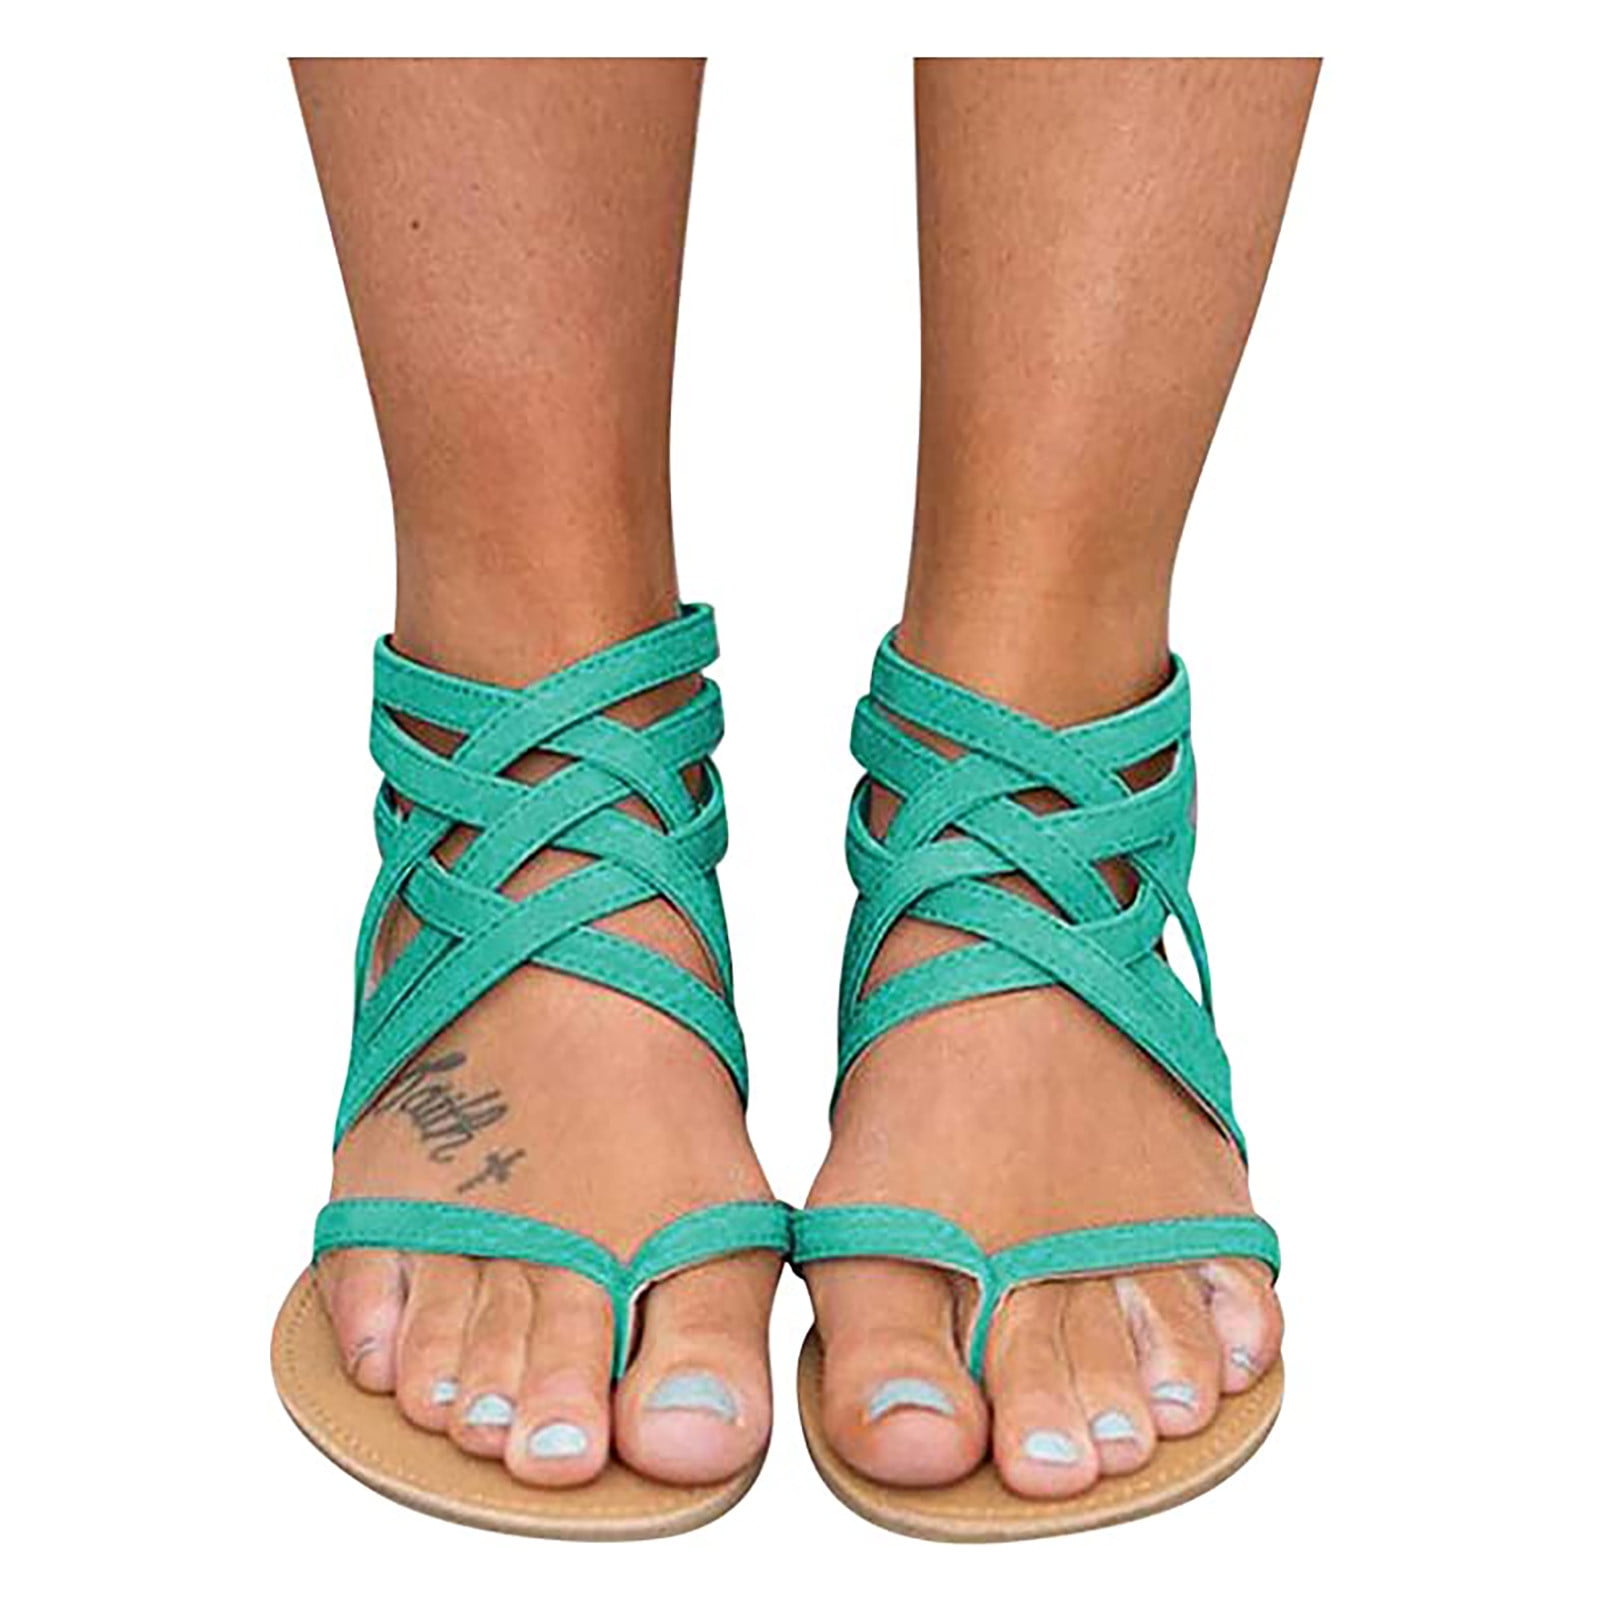 Women Sandals 2019 New Summer Leather Sandals Flip Flop Flat Sandals Casual Beach Shoes Ladies 43,Beige,4